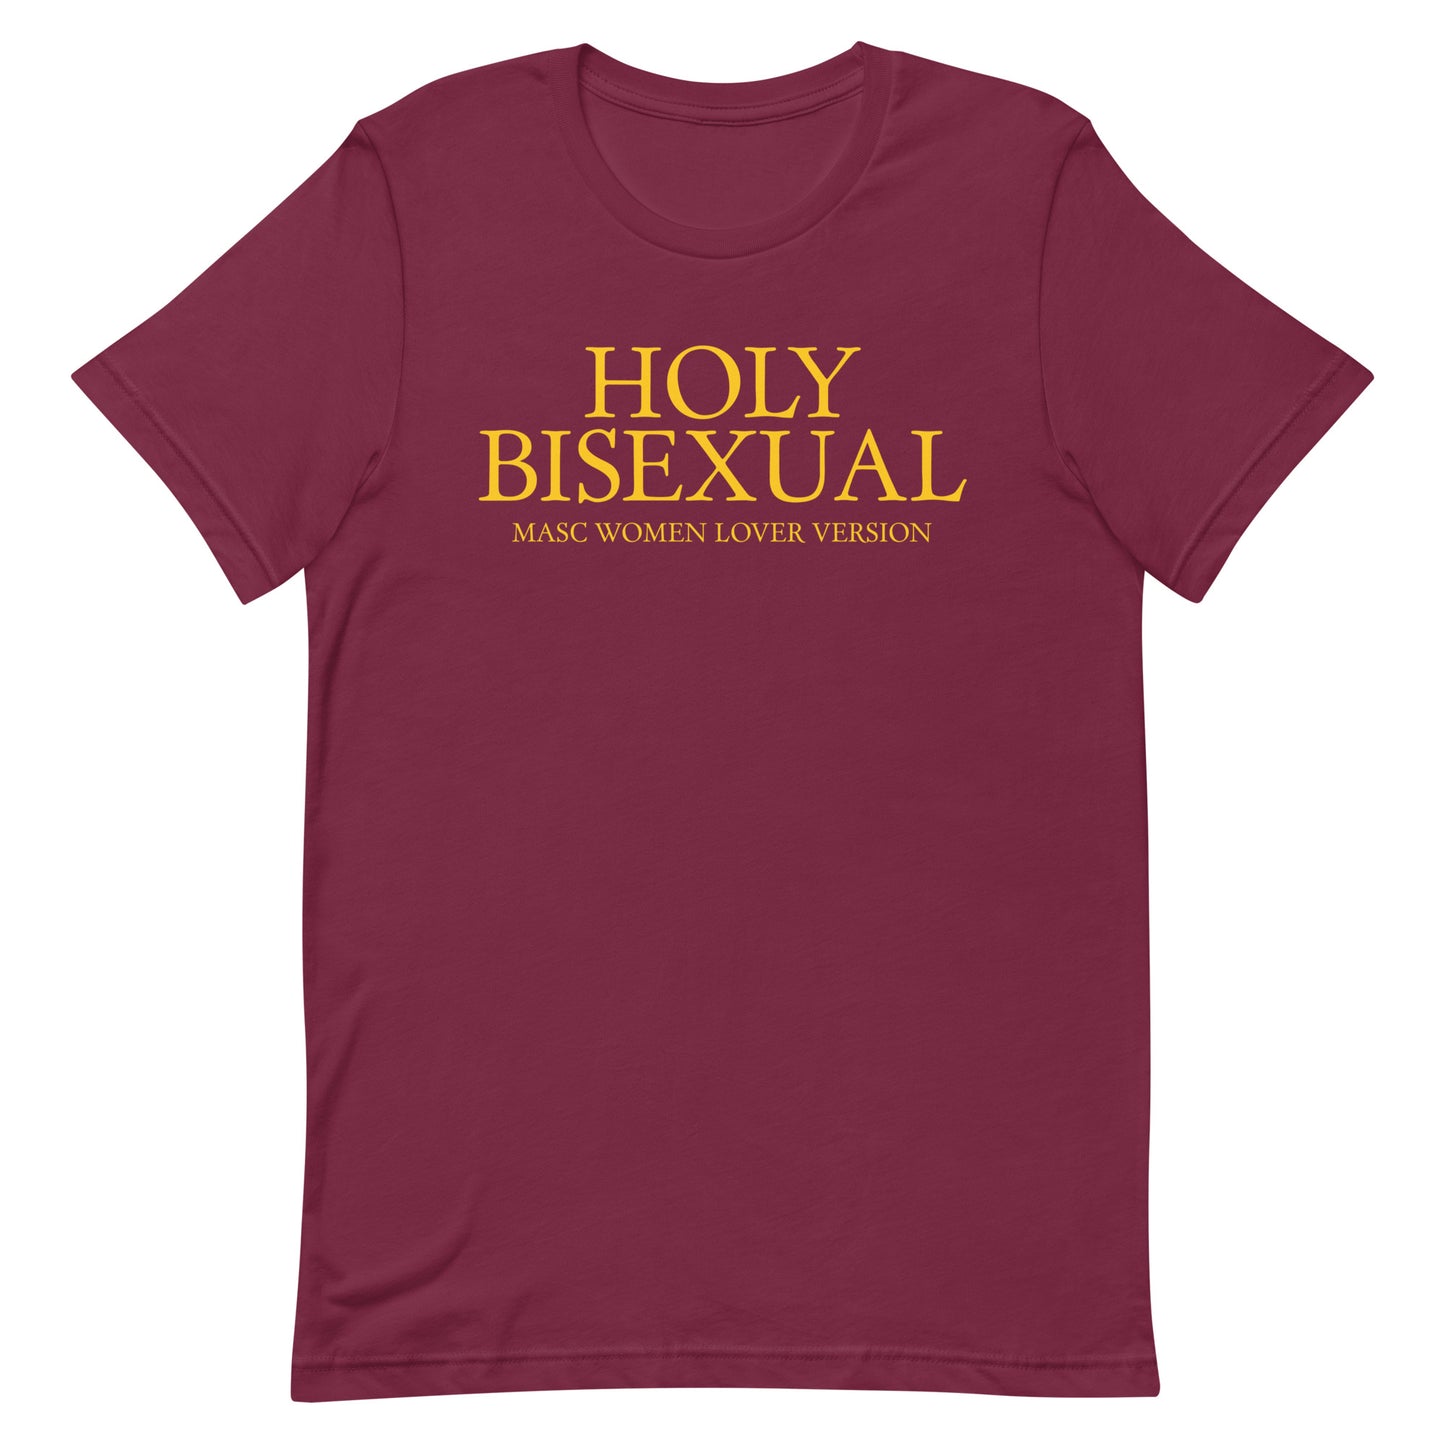 Holy Bisexual (Masc Women Lover) Unisex t-shirt